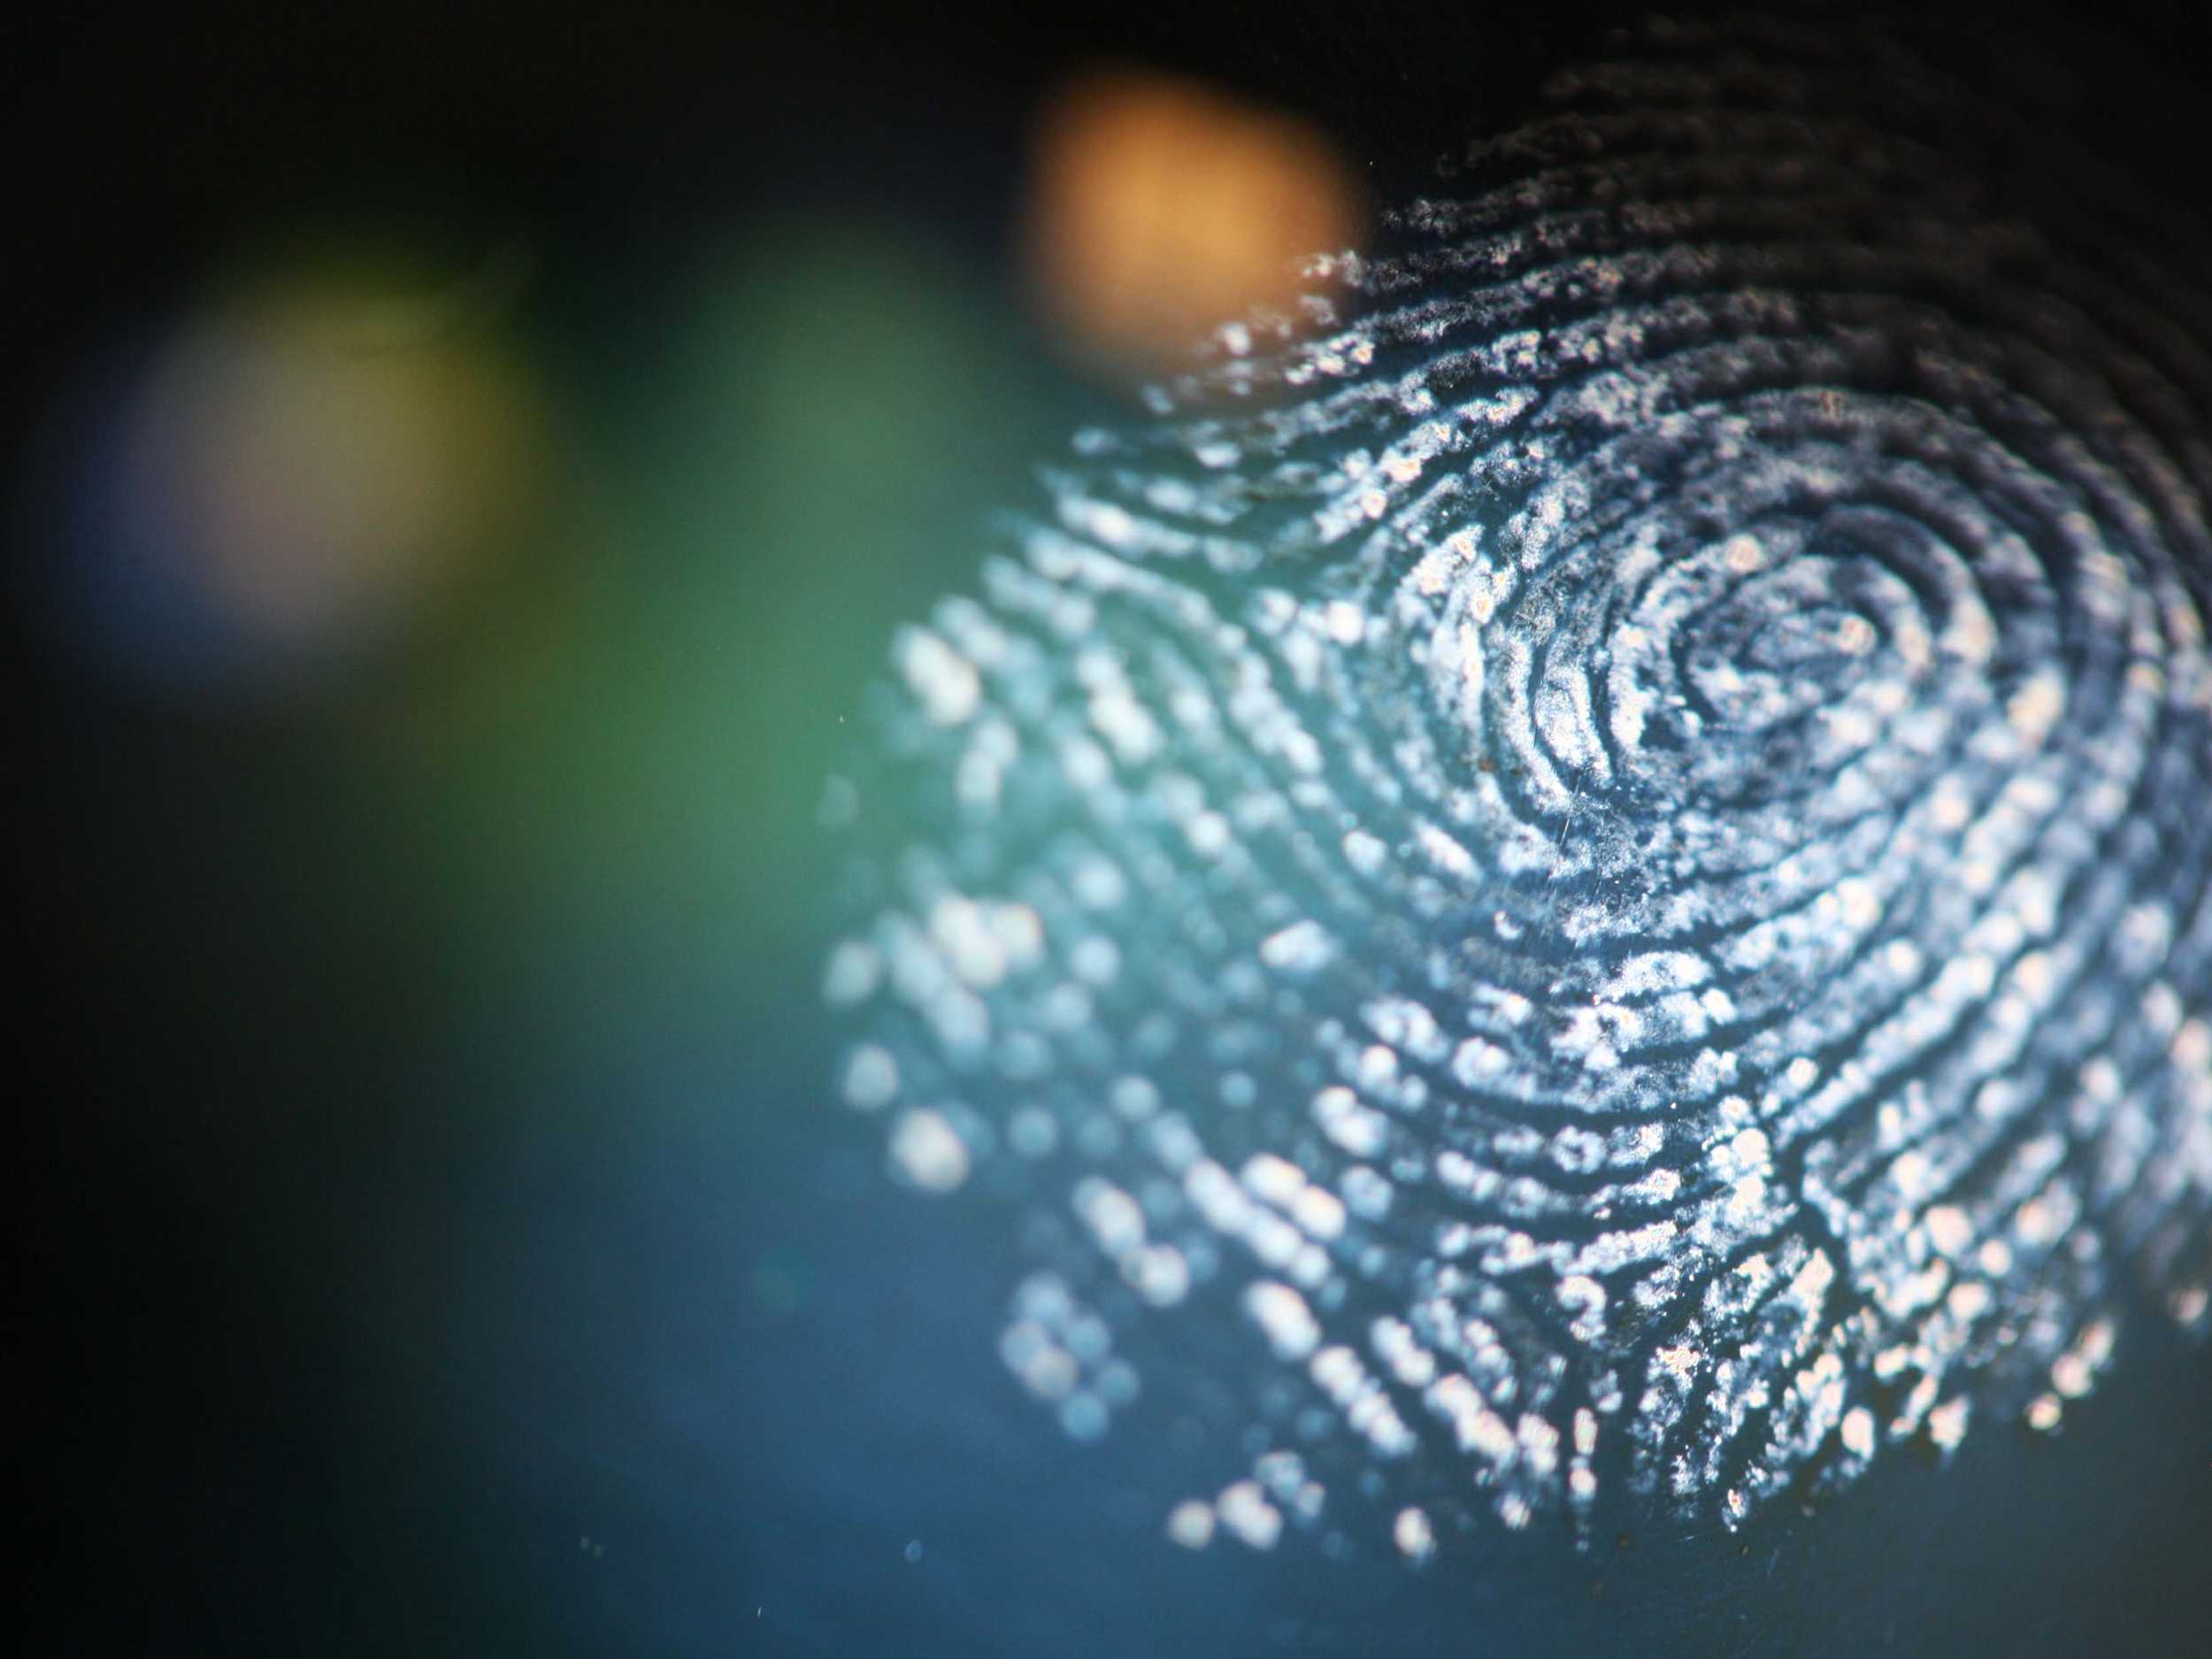 Fingerprint on transparent surface